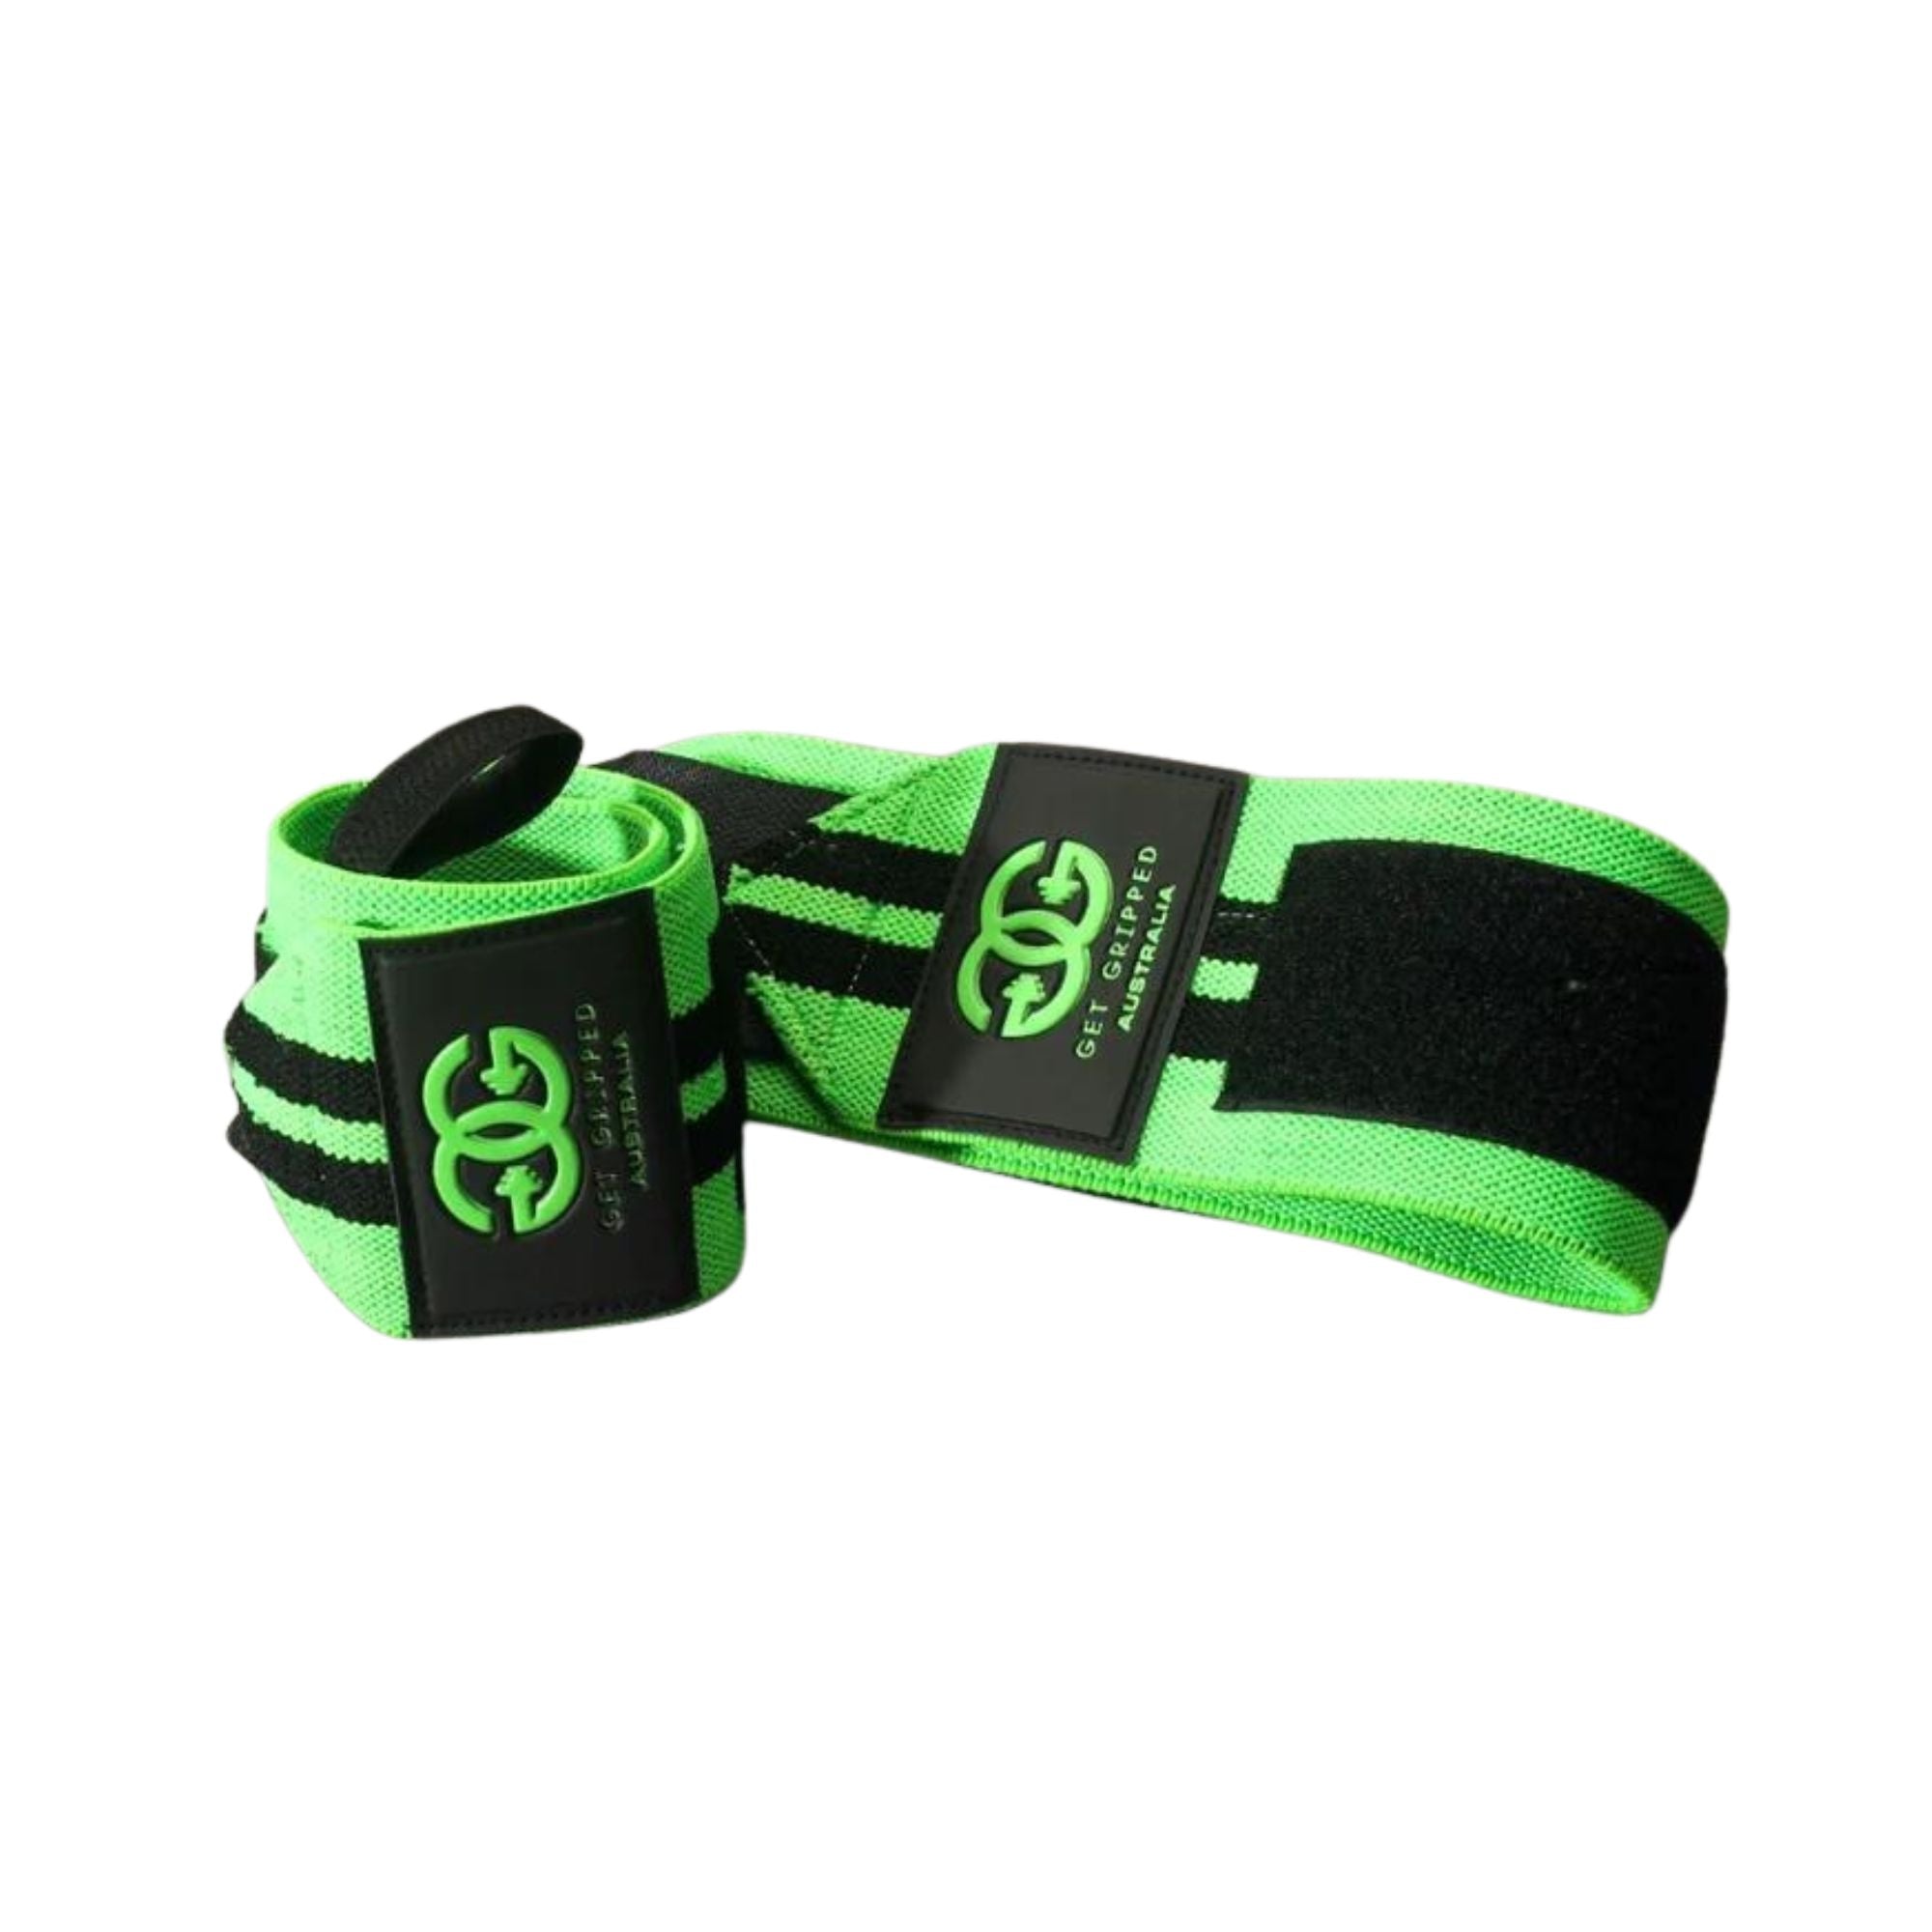 Get Gripped Premium Wrist Wraps Green